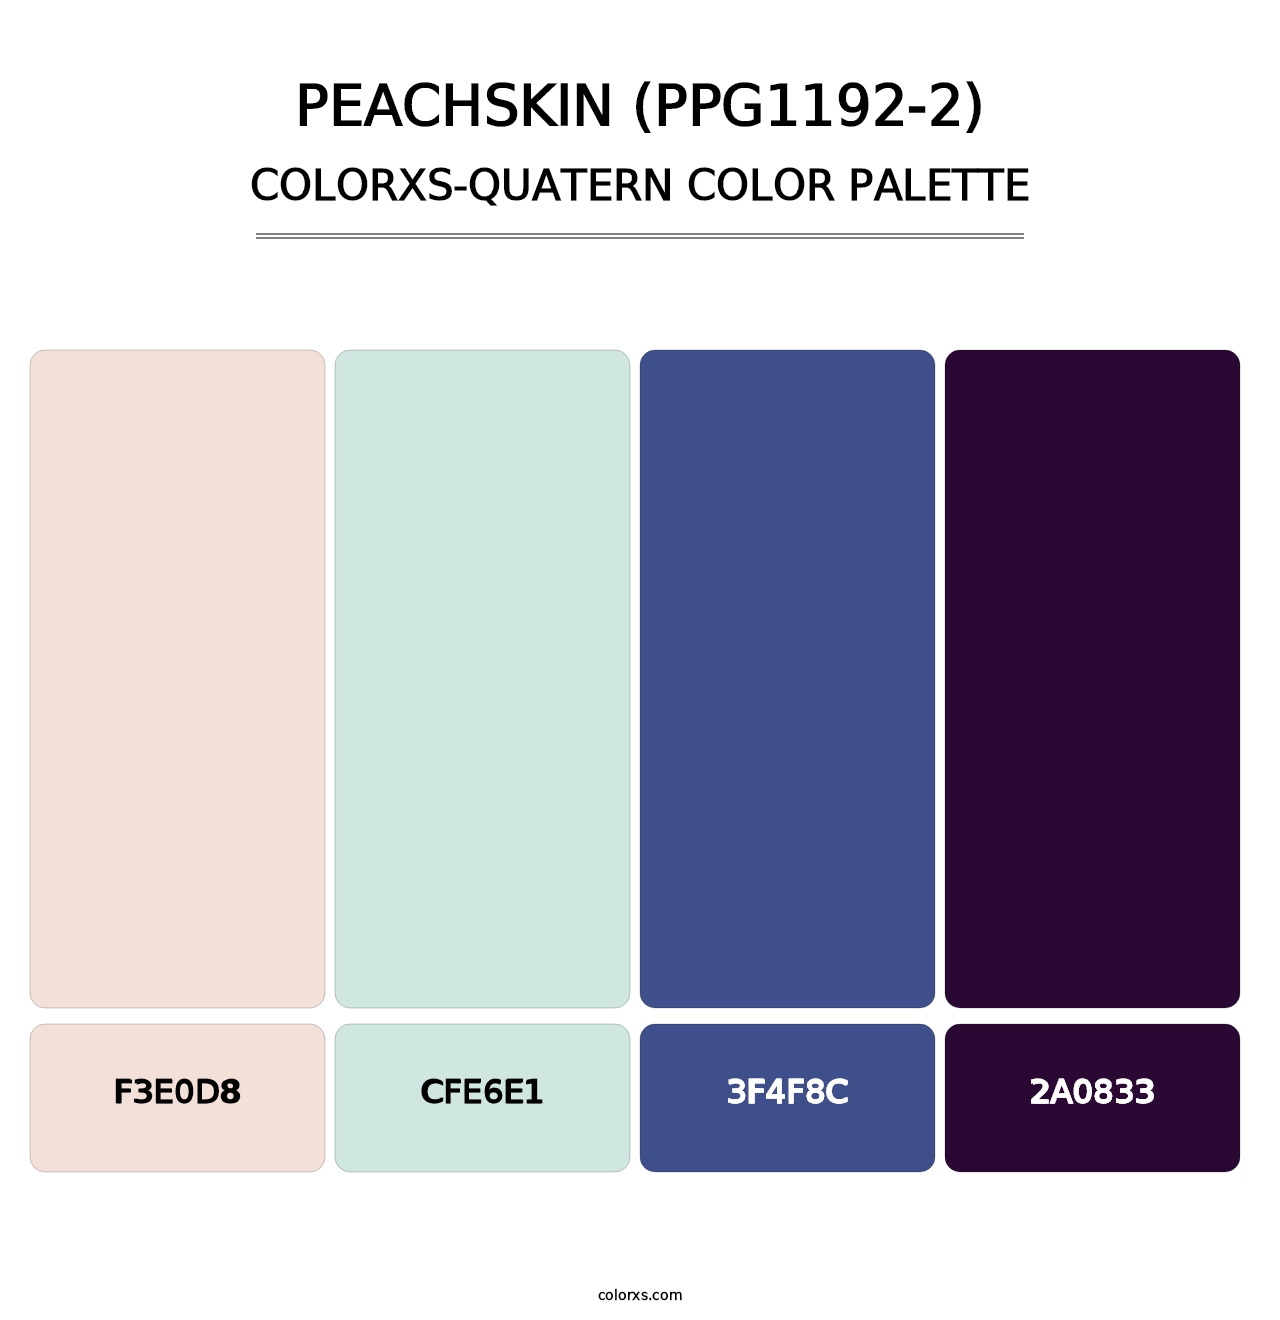 Peachskin (PPG1192-2) - Colorxs Quatern Palette